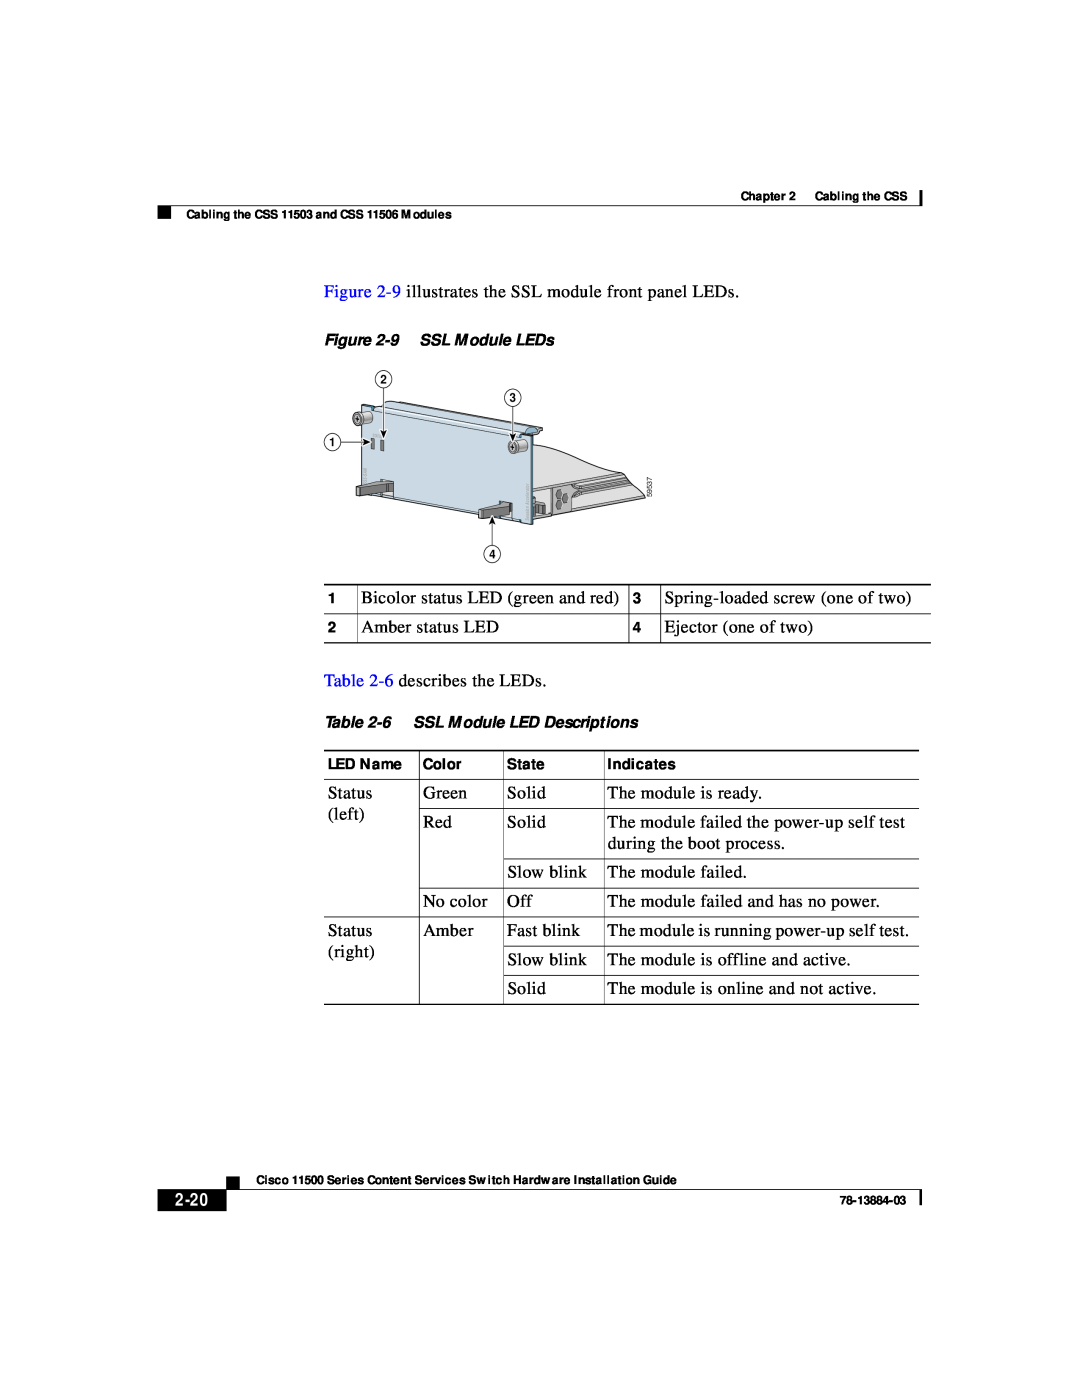 Cisco Systems 11500 Series manual LED Name, Color, State, Indicates, 2-20, 9 SSL Module LEDs, 6 SSL Module LED Descriptions 